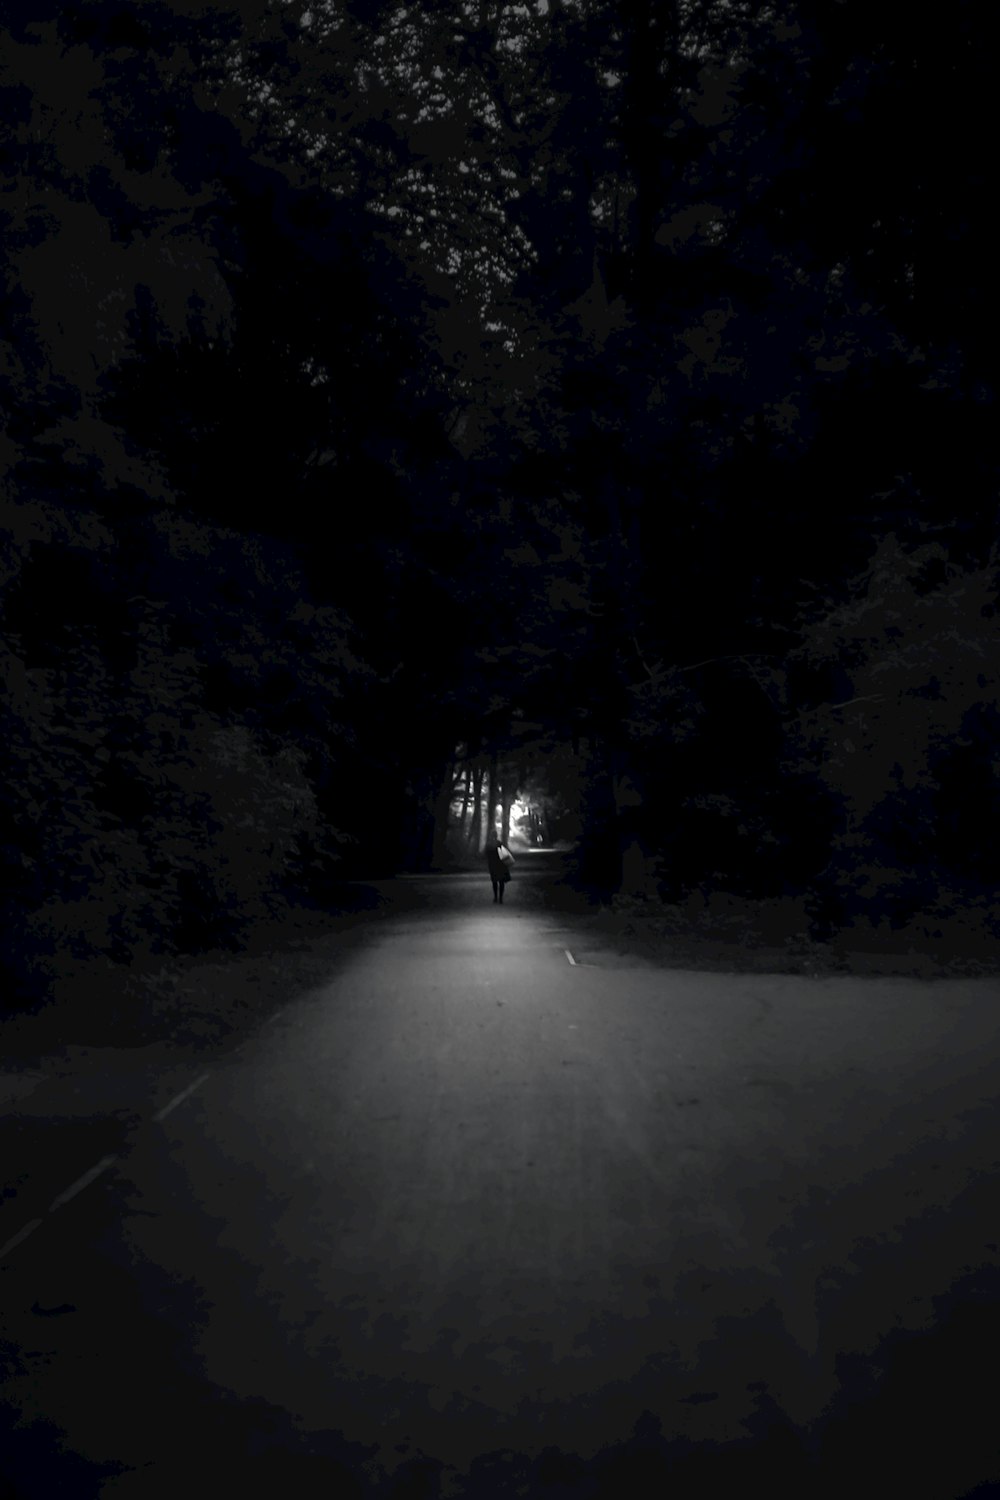 a person walking down a dark road at night